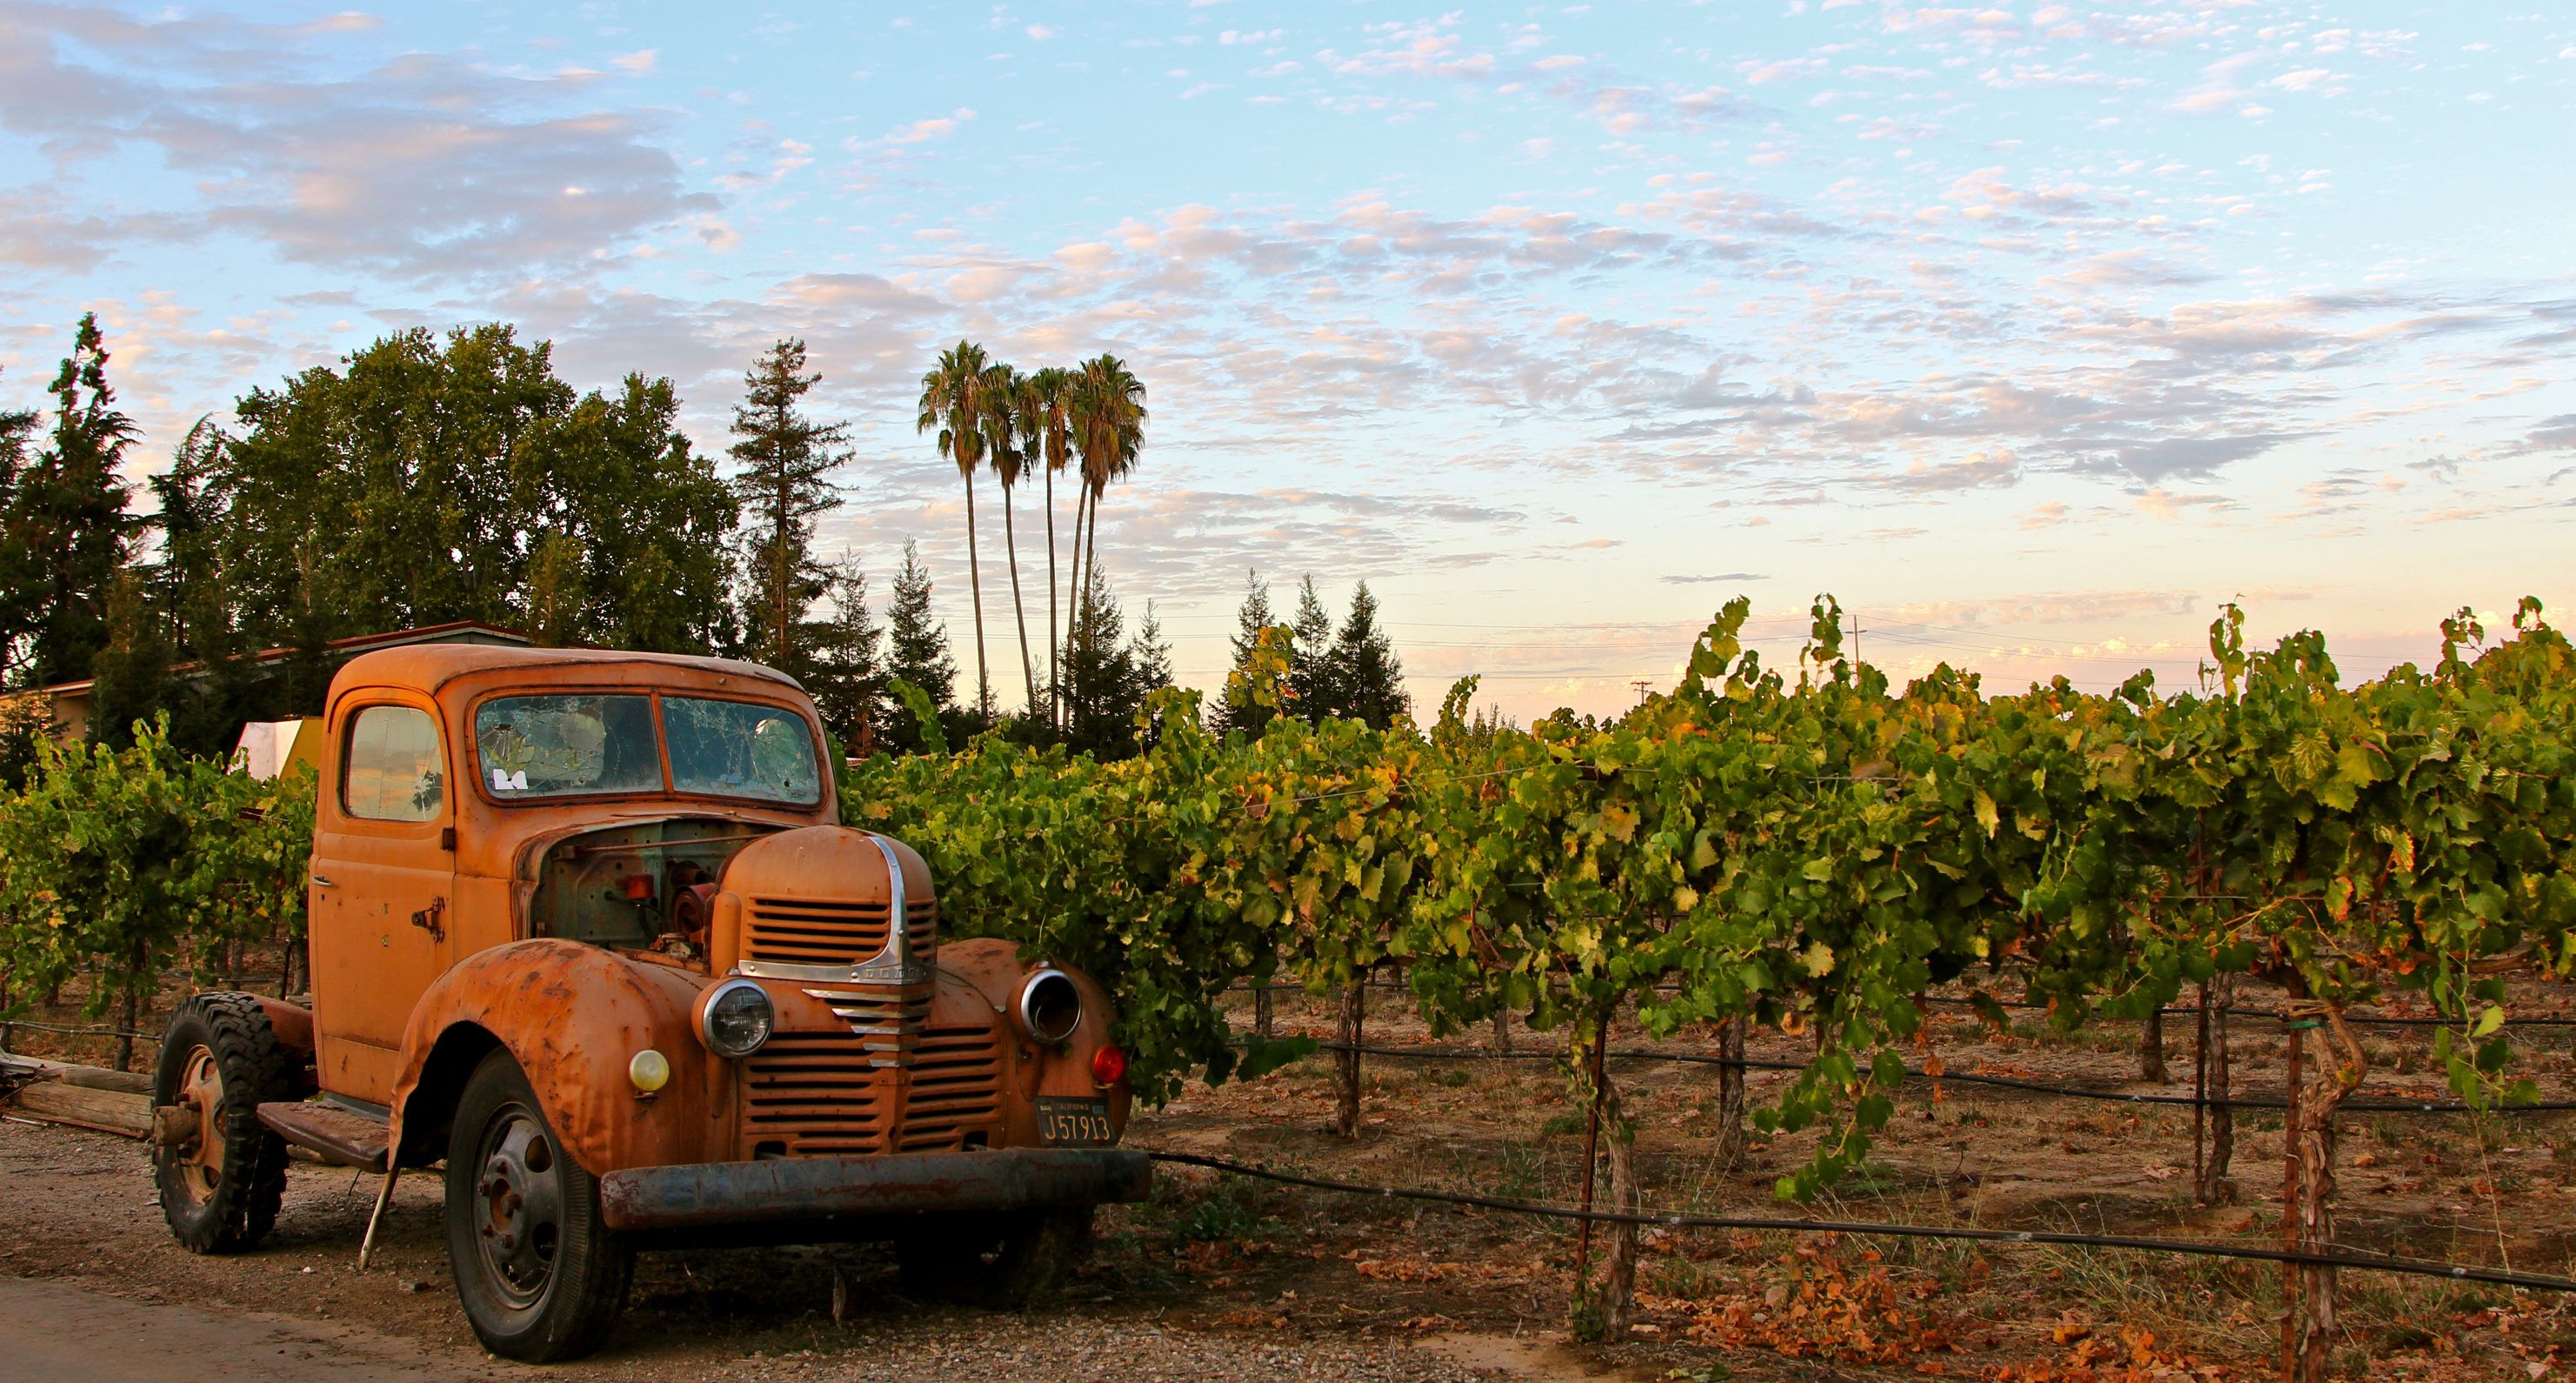 How Lodi is one of California’s premium wine regions